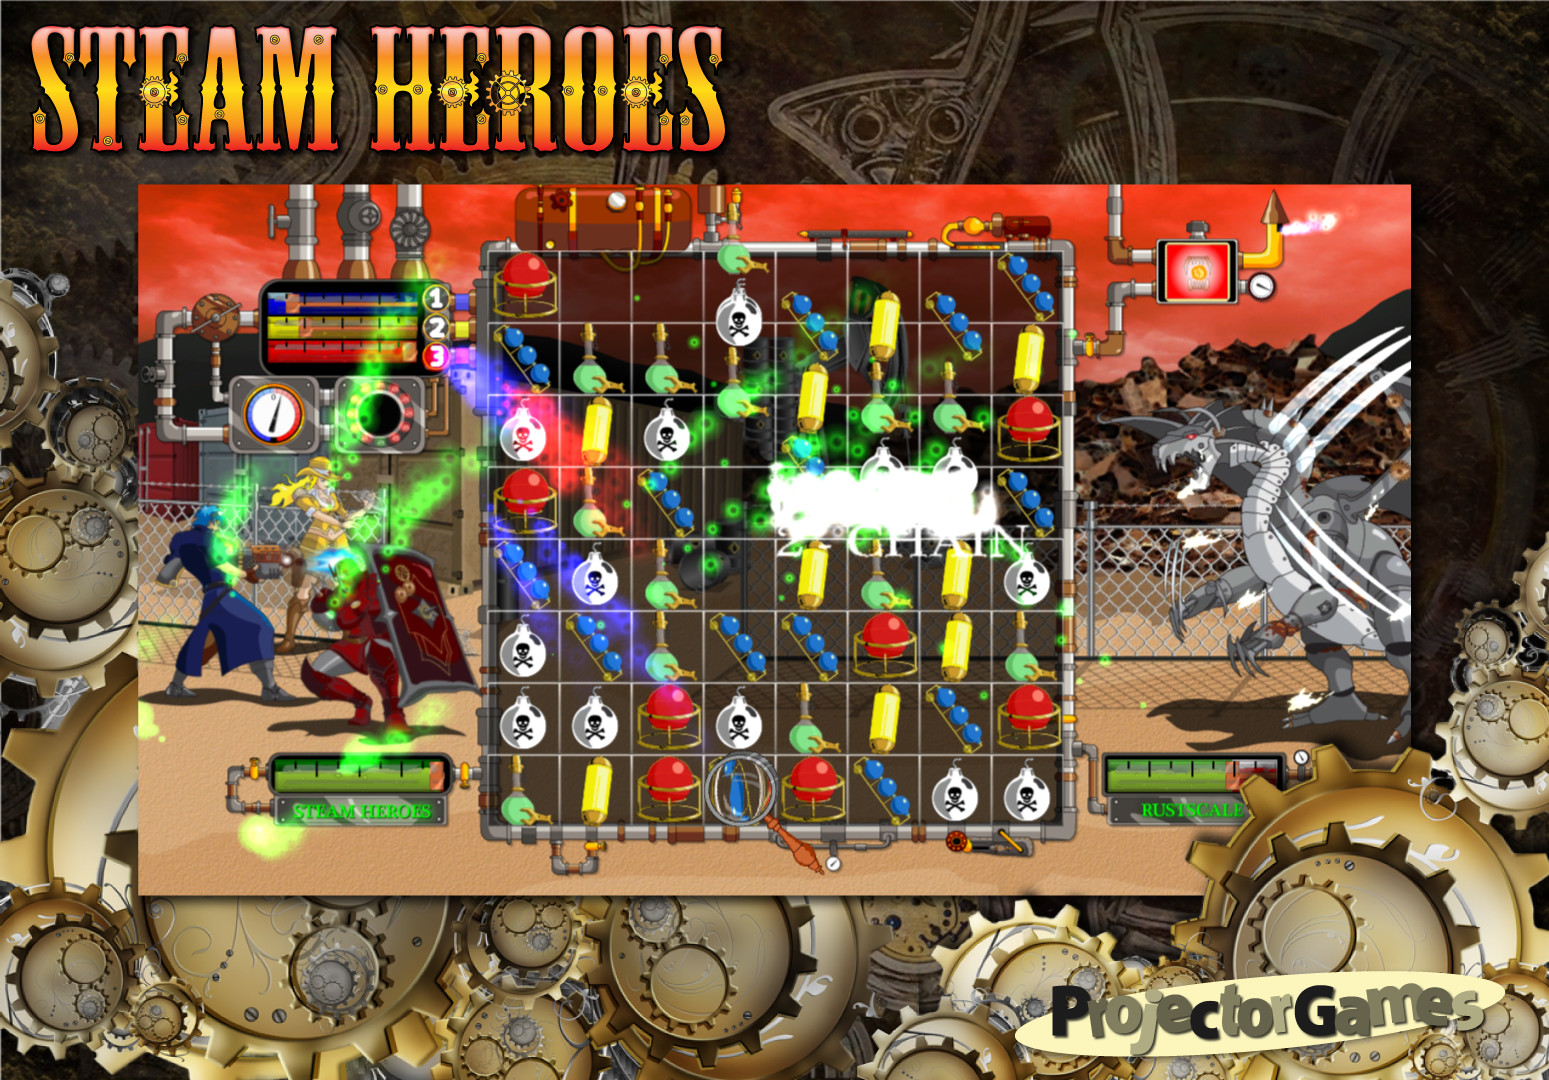 heroes 6 steam download free